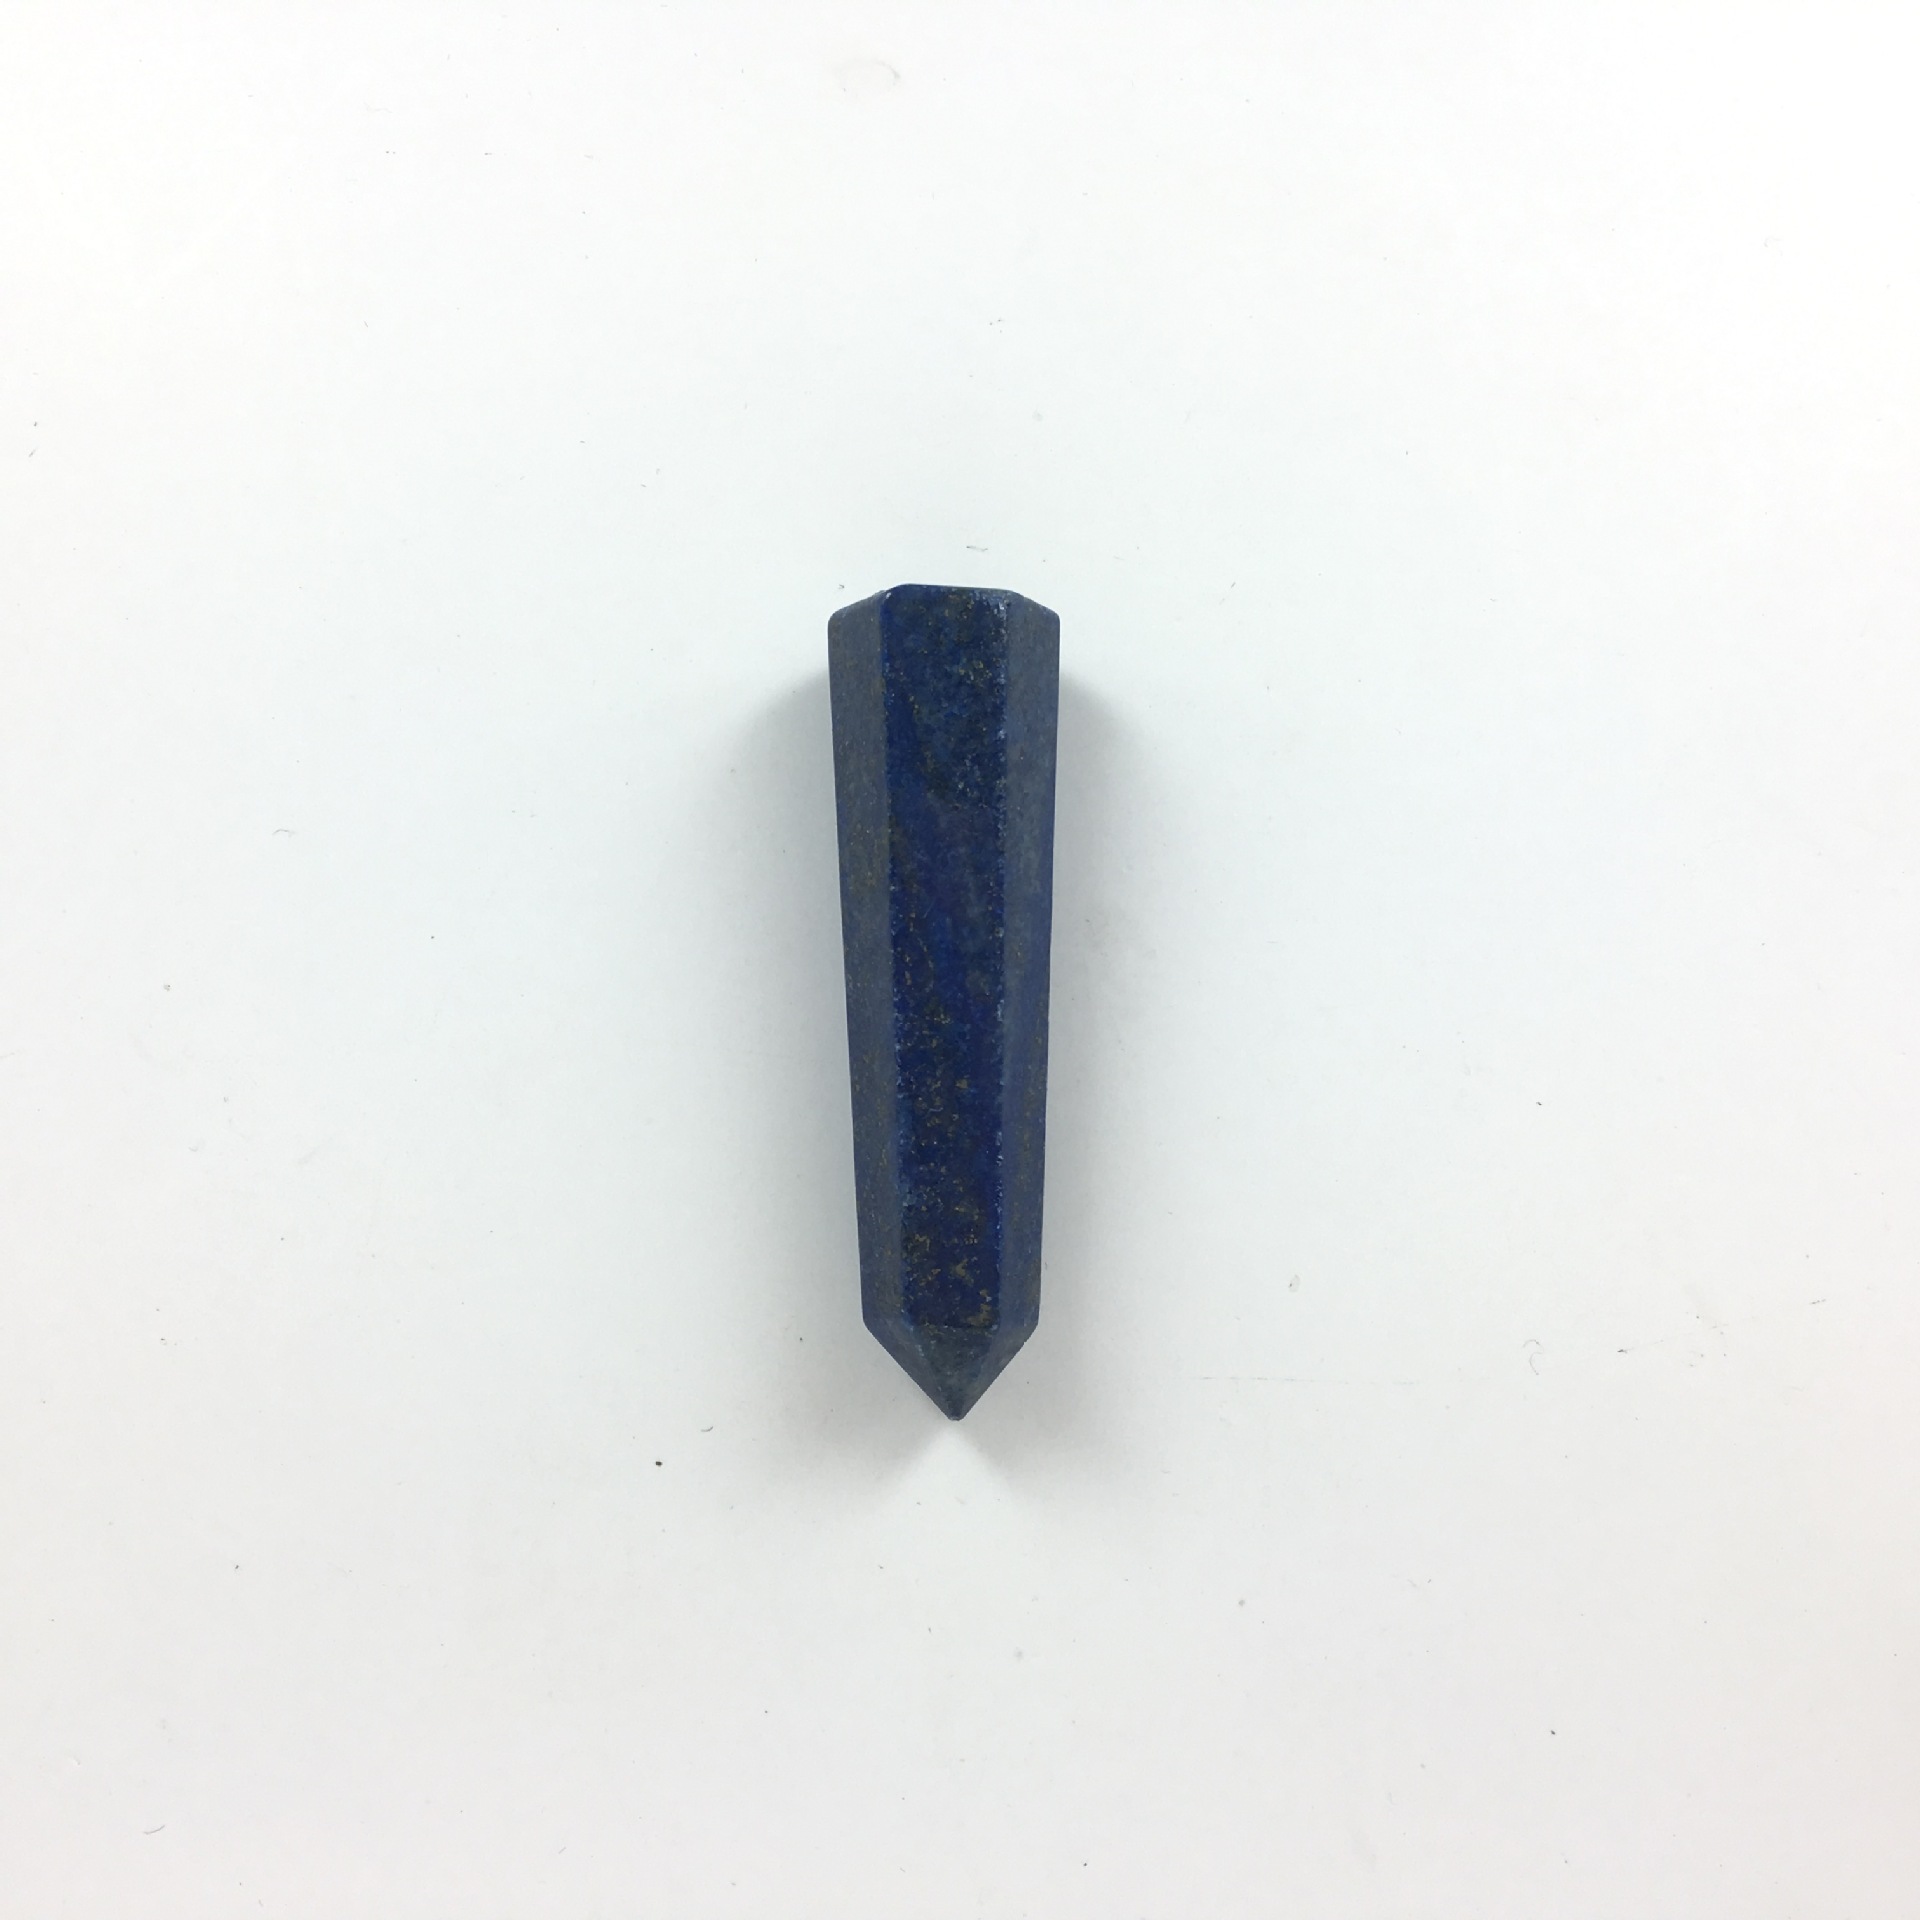 4 lapis lazuli